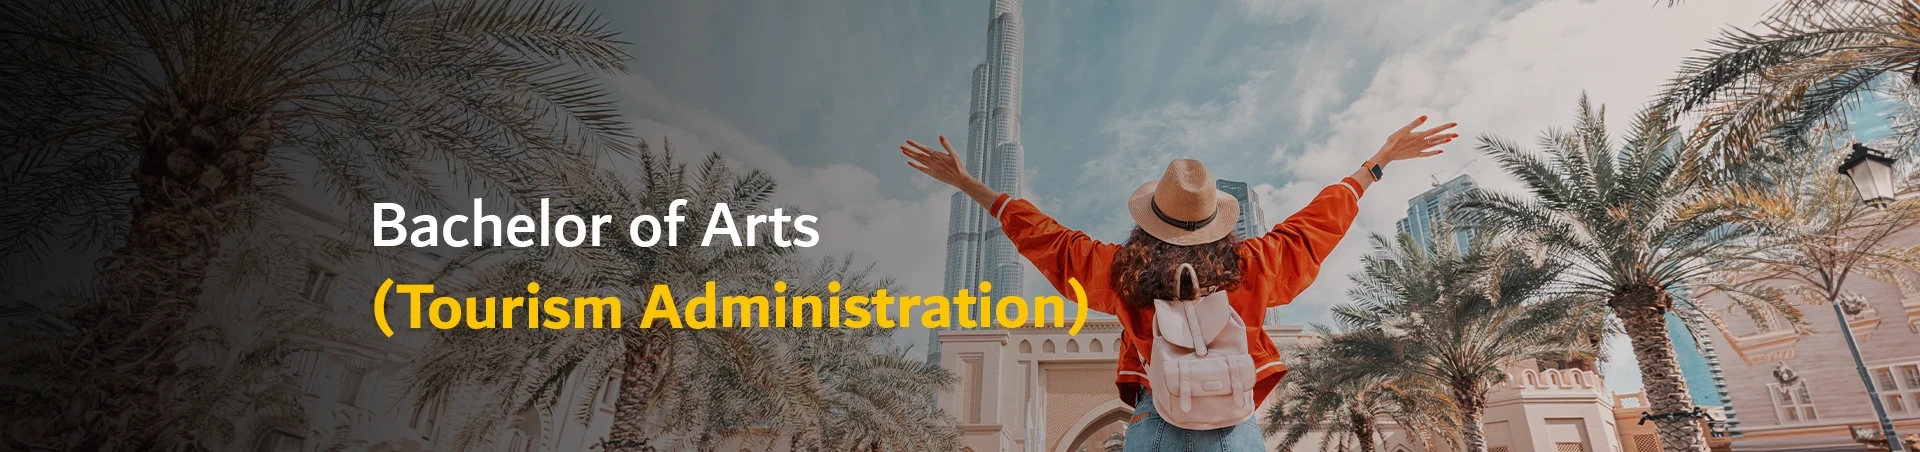 Bachelor of Arts (Tourism Administration)